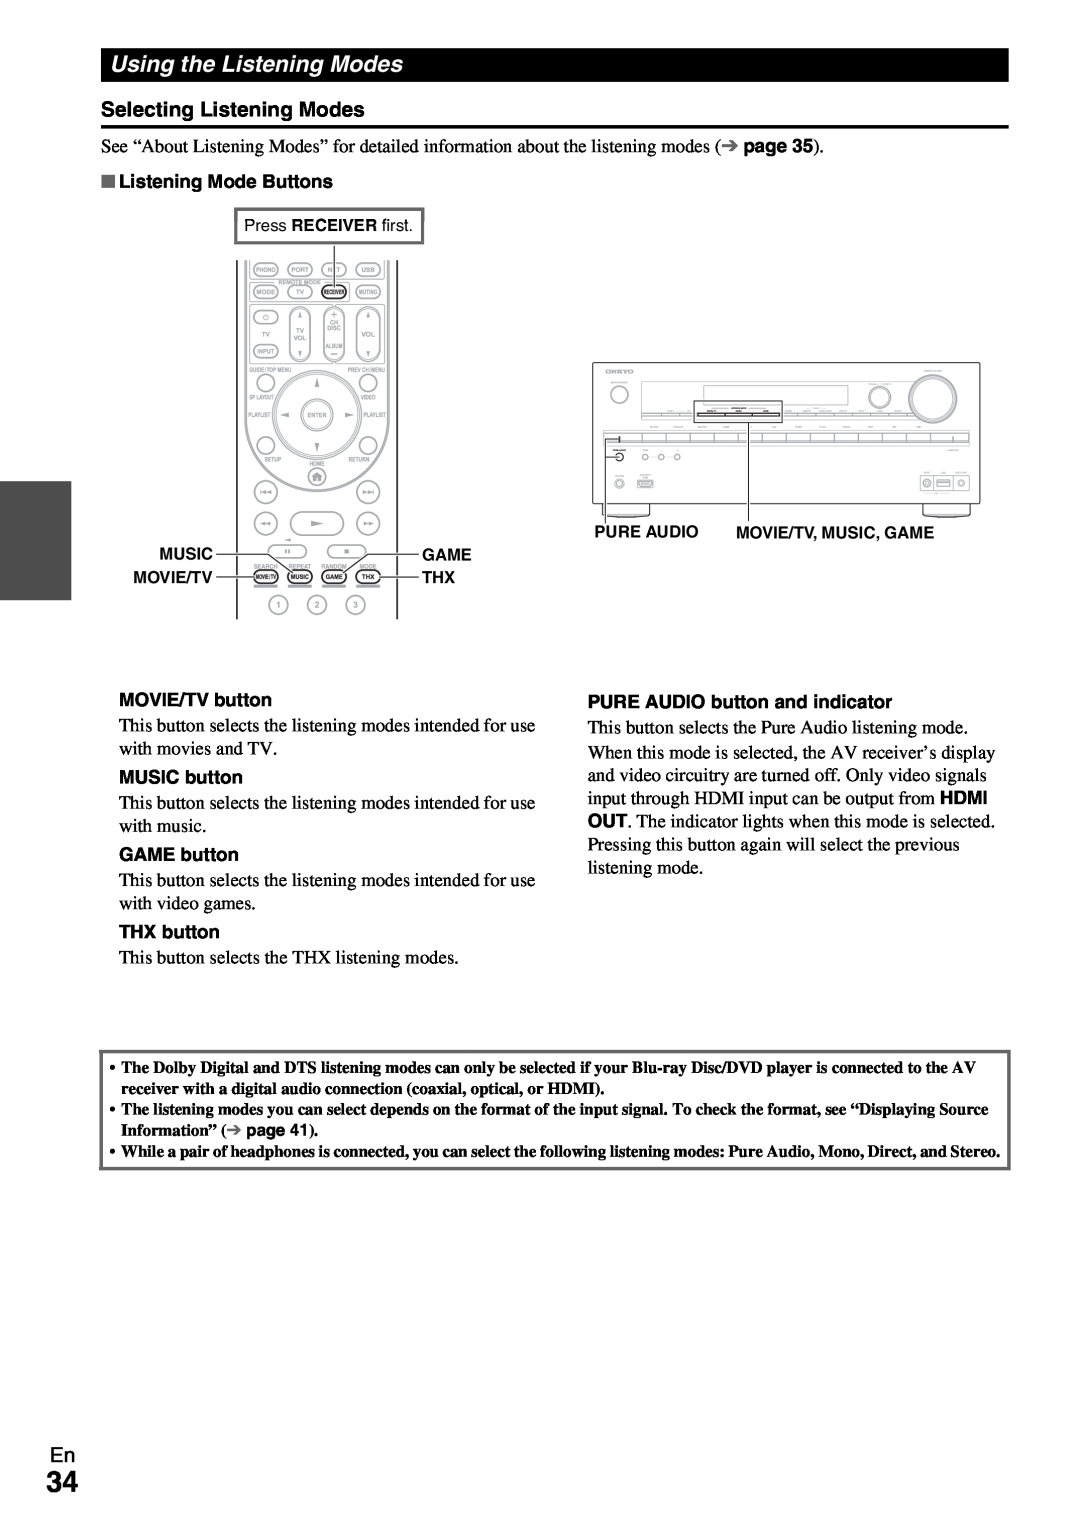 Onkyo HT-RC370 Using the Listening Modes, Listening Mode Buttons, MOVIE/TV button, MUSIC button, GAME button, THX button 